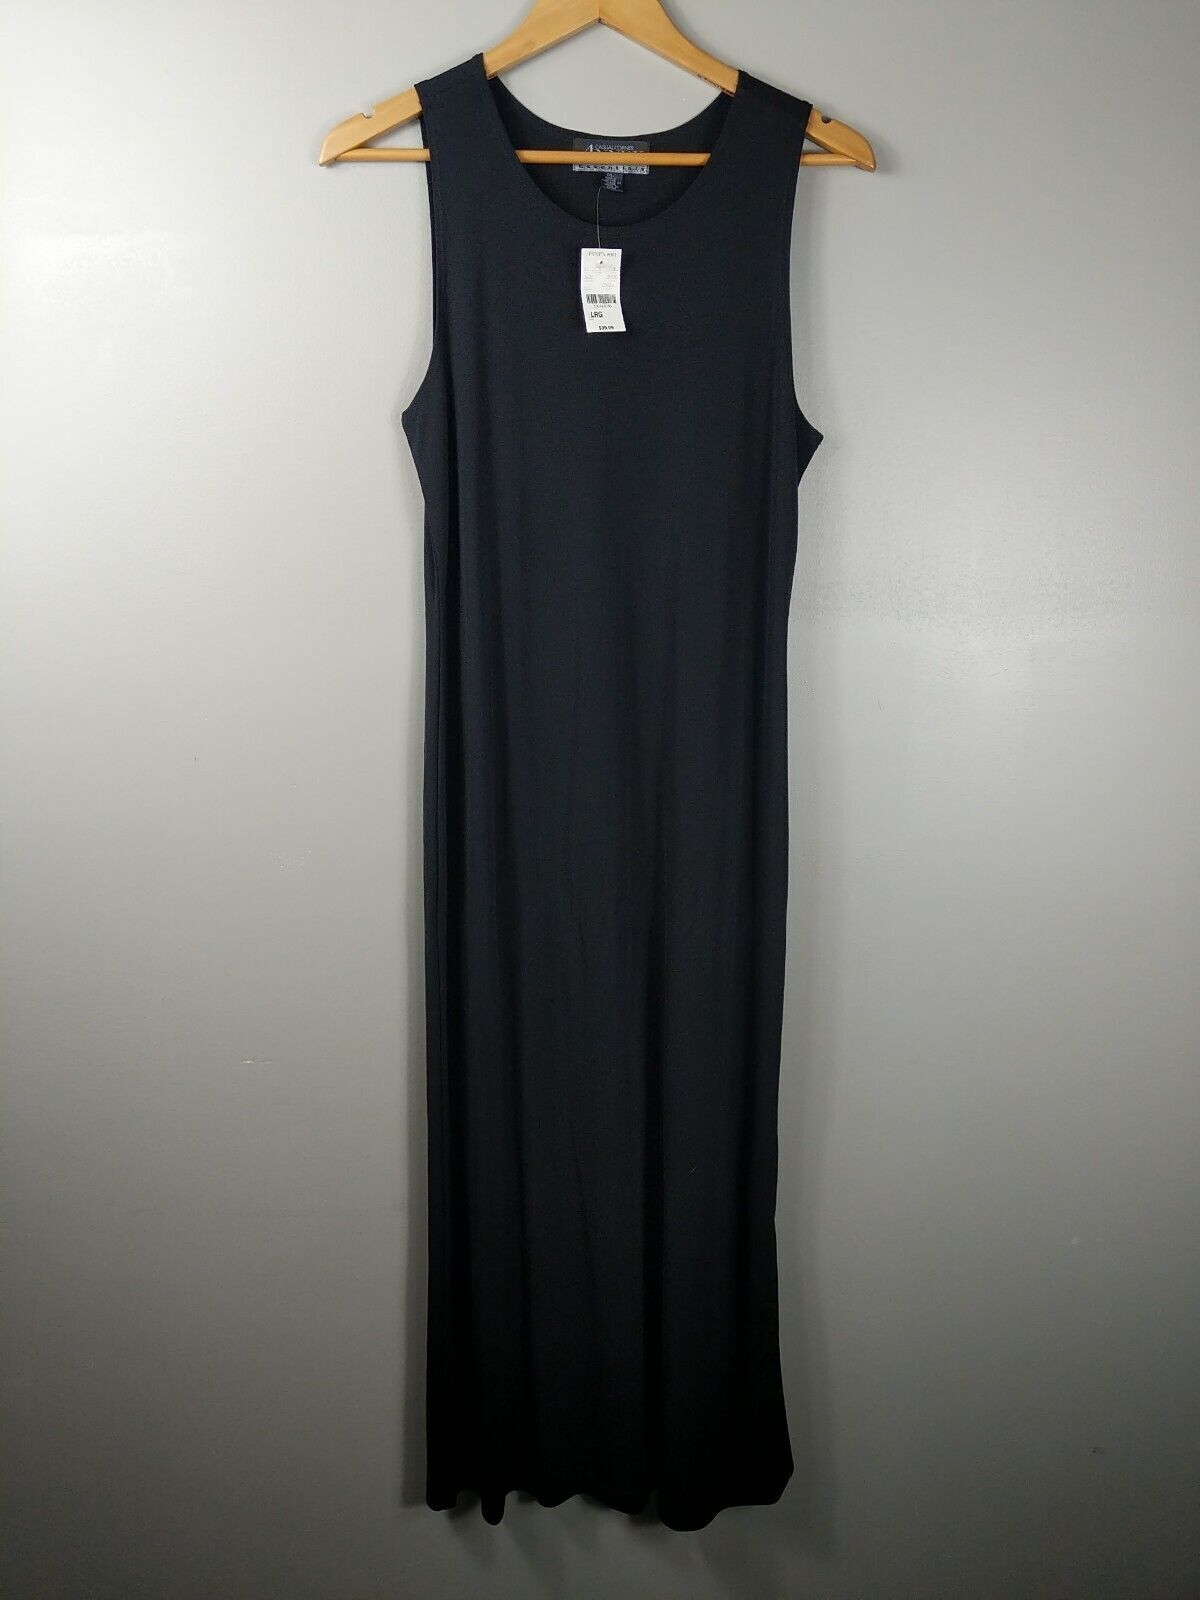 NWT: Casual Corner Annex Petite Large Essentials Long Black Dress, MSRP $40